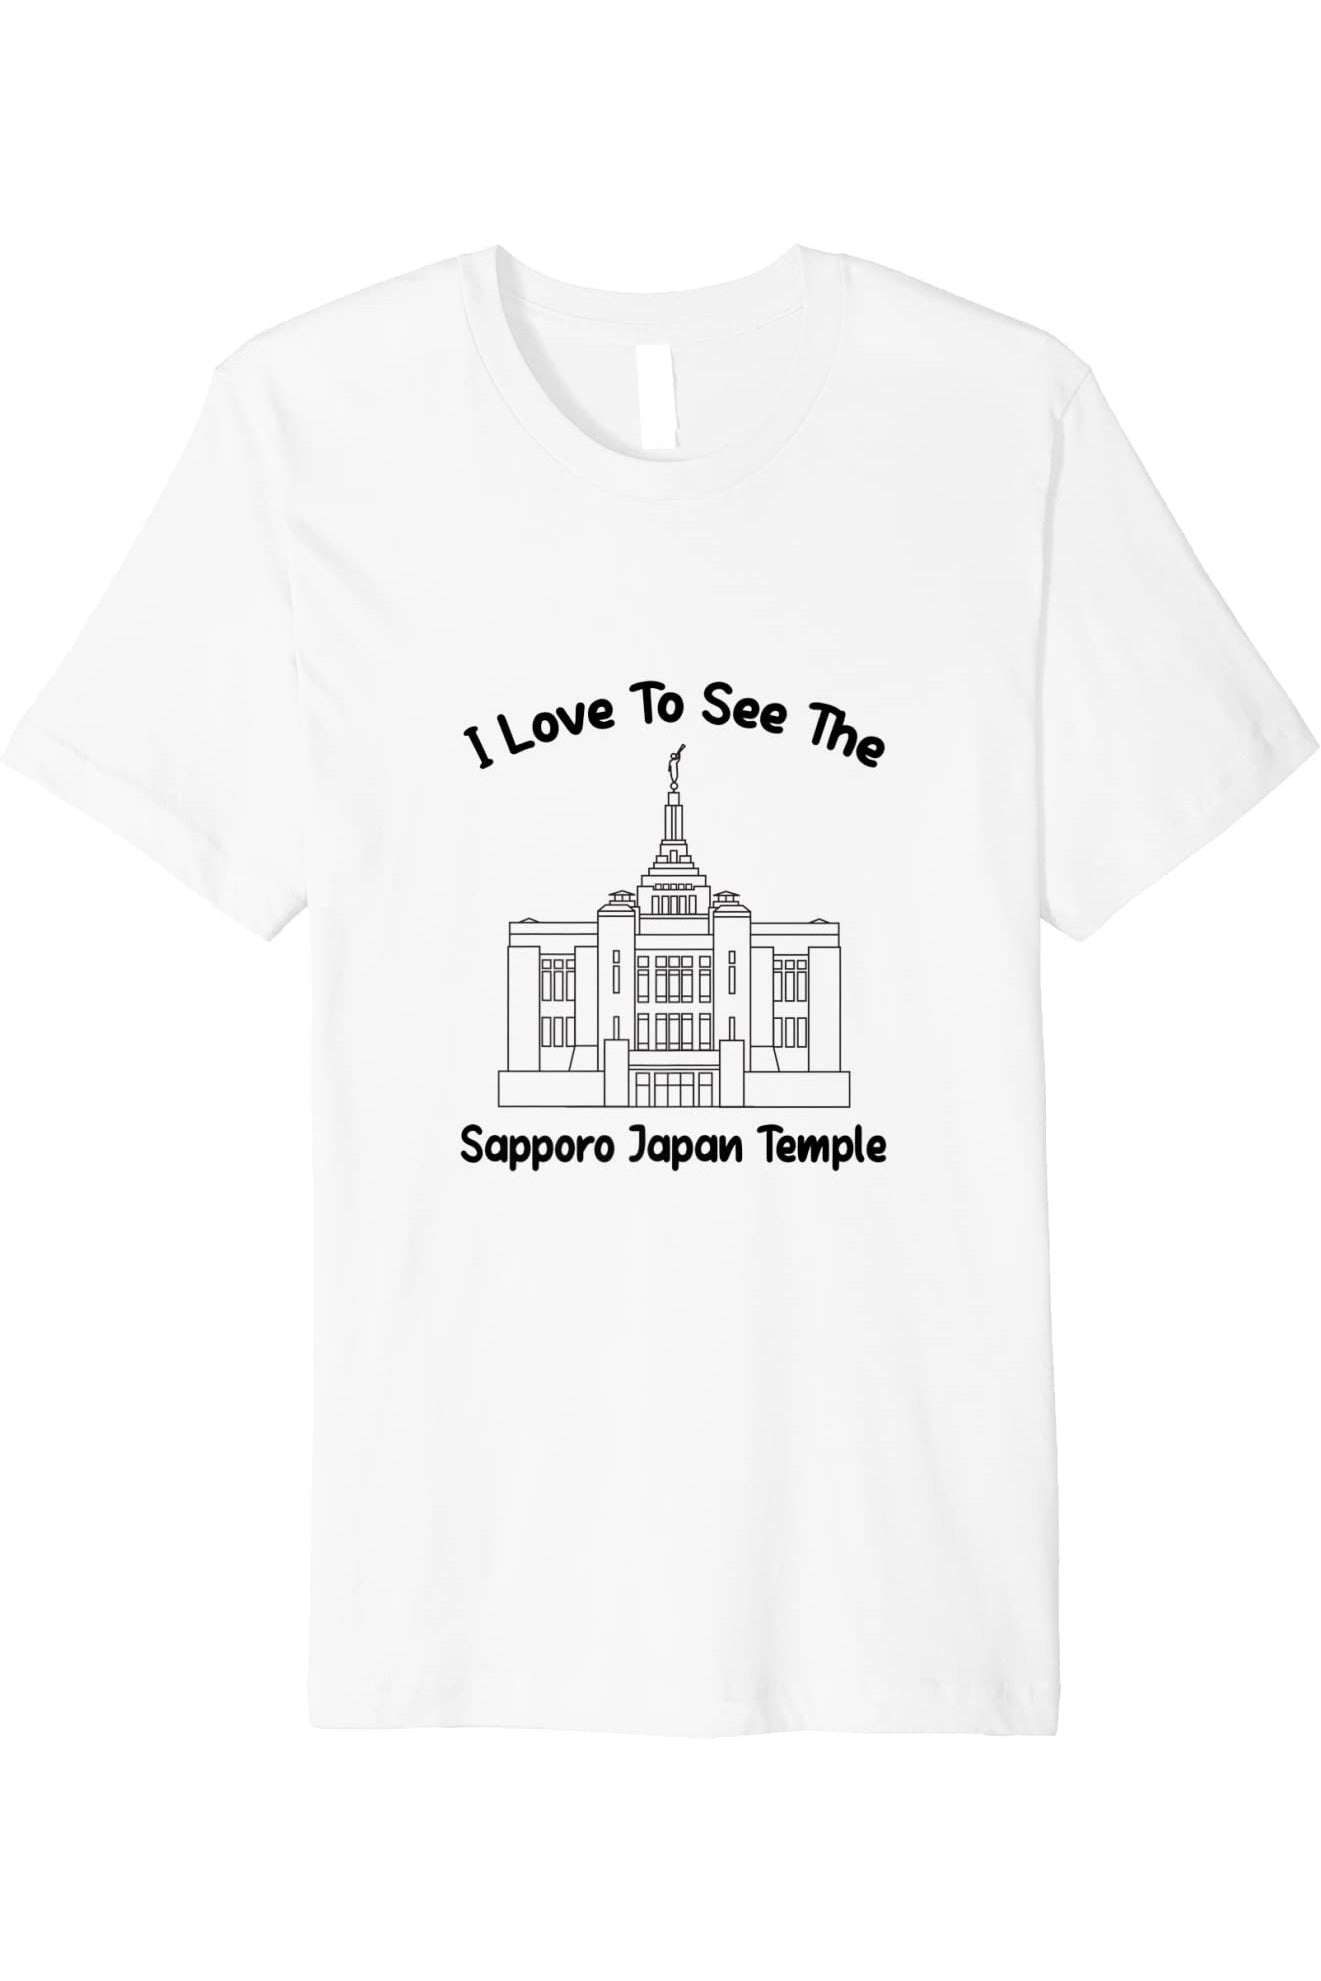 Sapporo Japan Temple T-Shirt - Premium - Primary Style (English) US